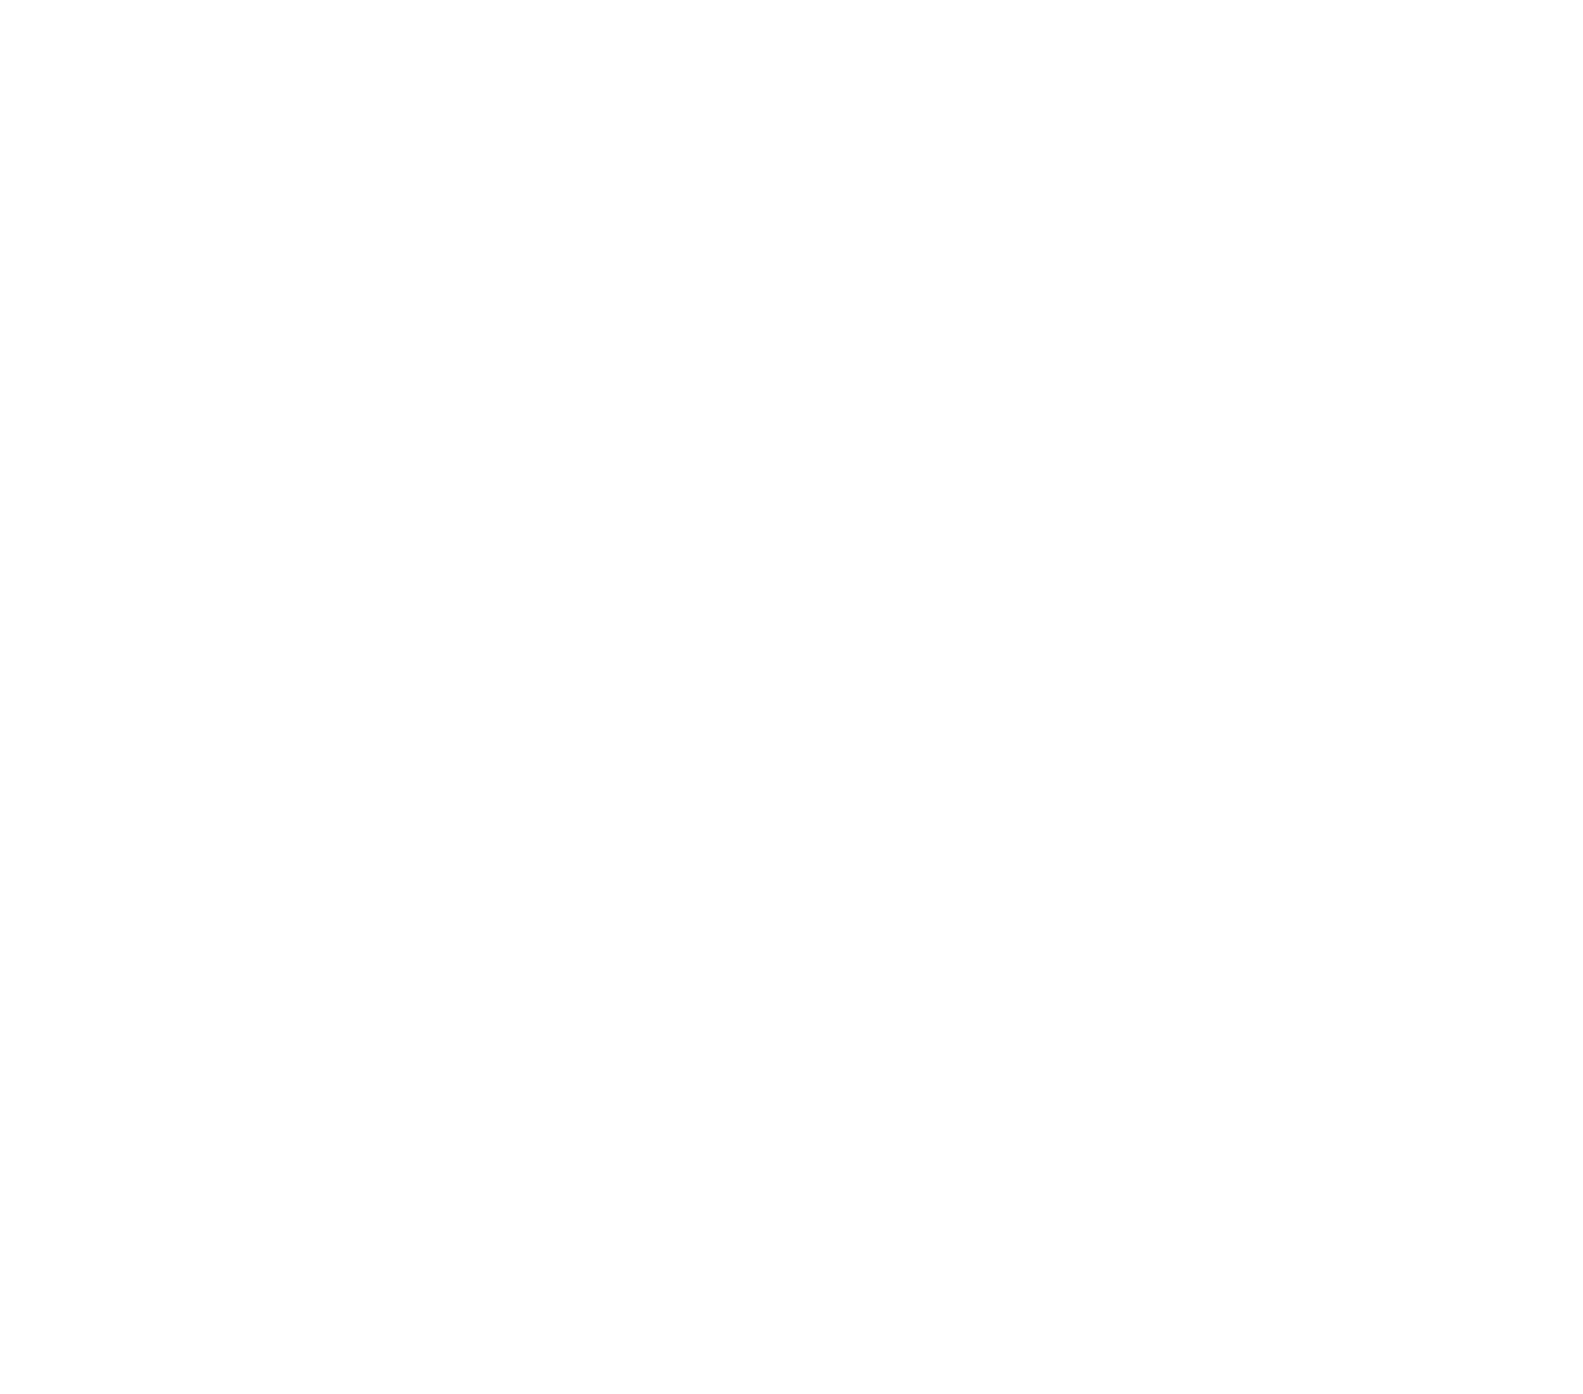 Svenska Cellulosa Aktiebolaget (SCA) logo pour fonds sombres (PNG transparent)